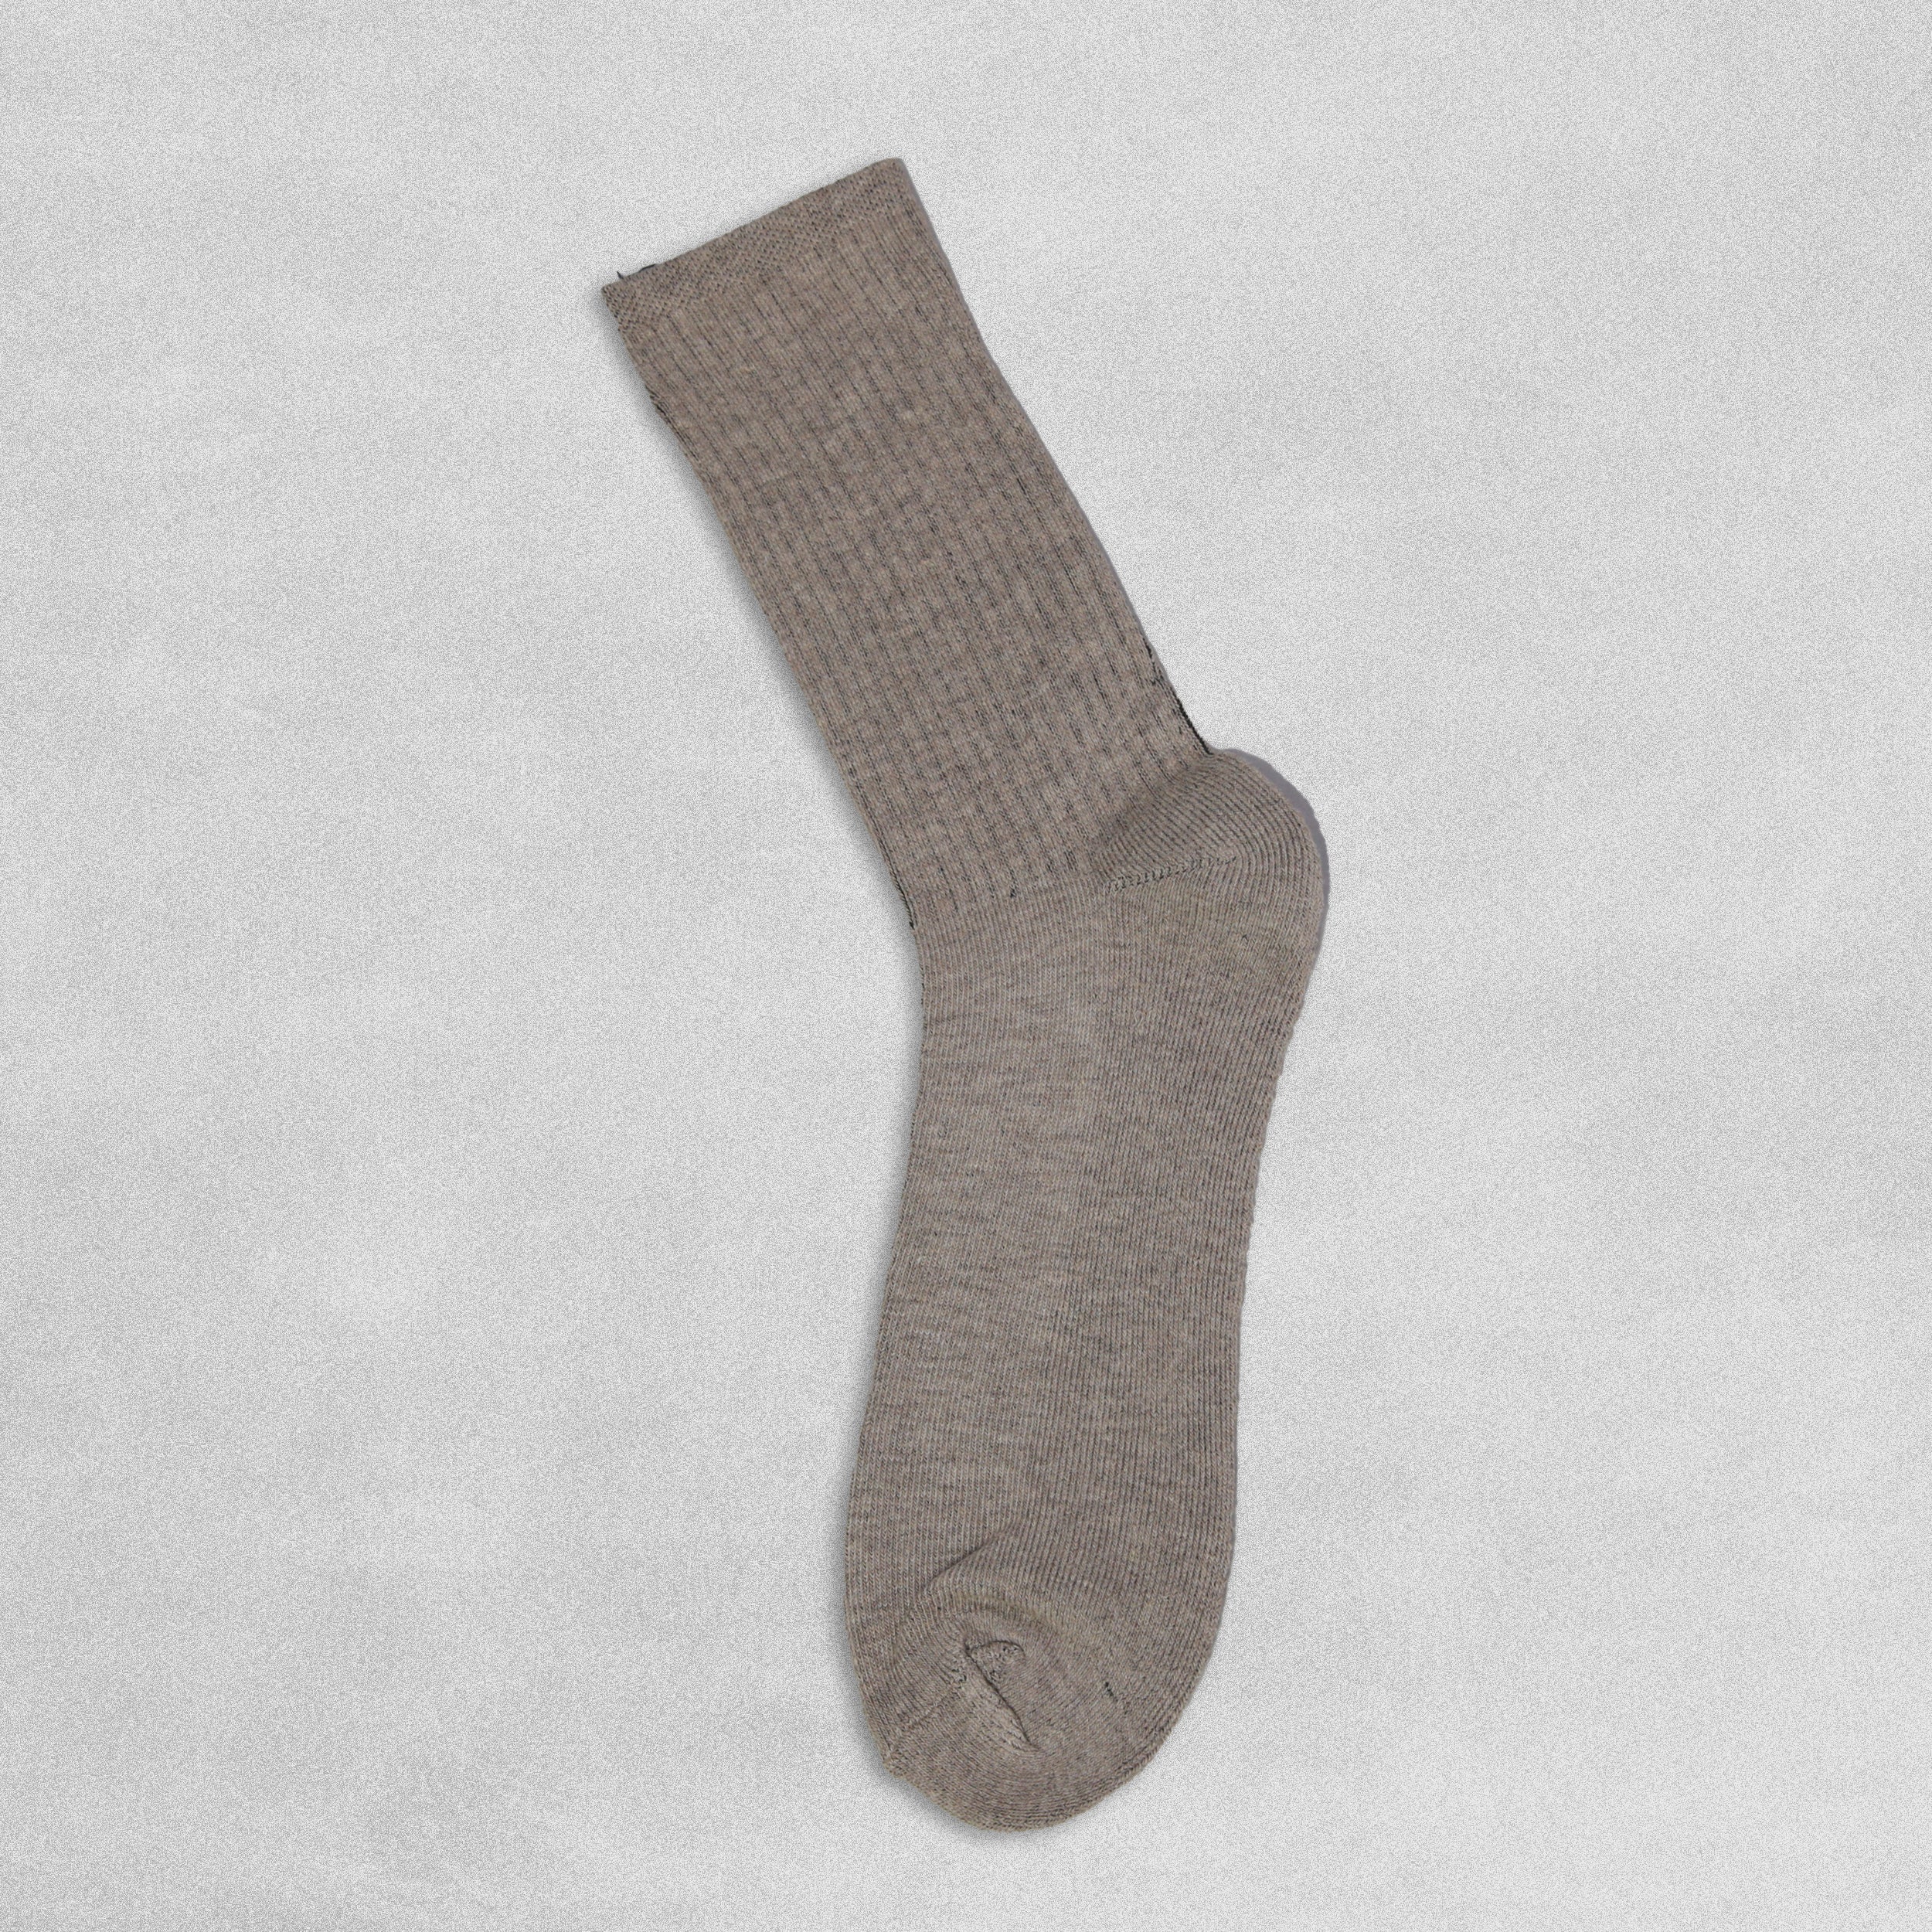 Hewitt & Munro - Mens Walking Socks Assorted Colours Size 41-46 (UK 7-11) - 3 Pairs